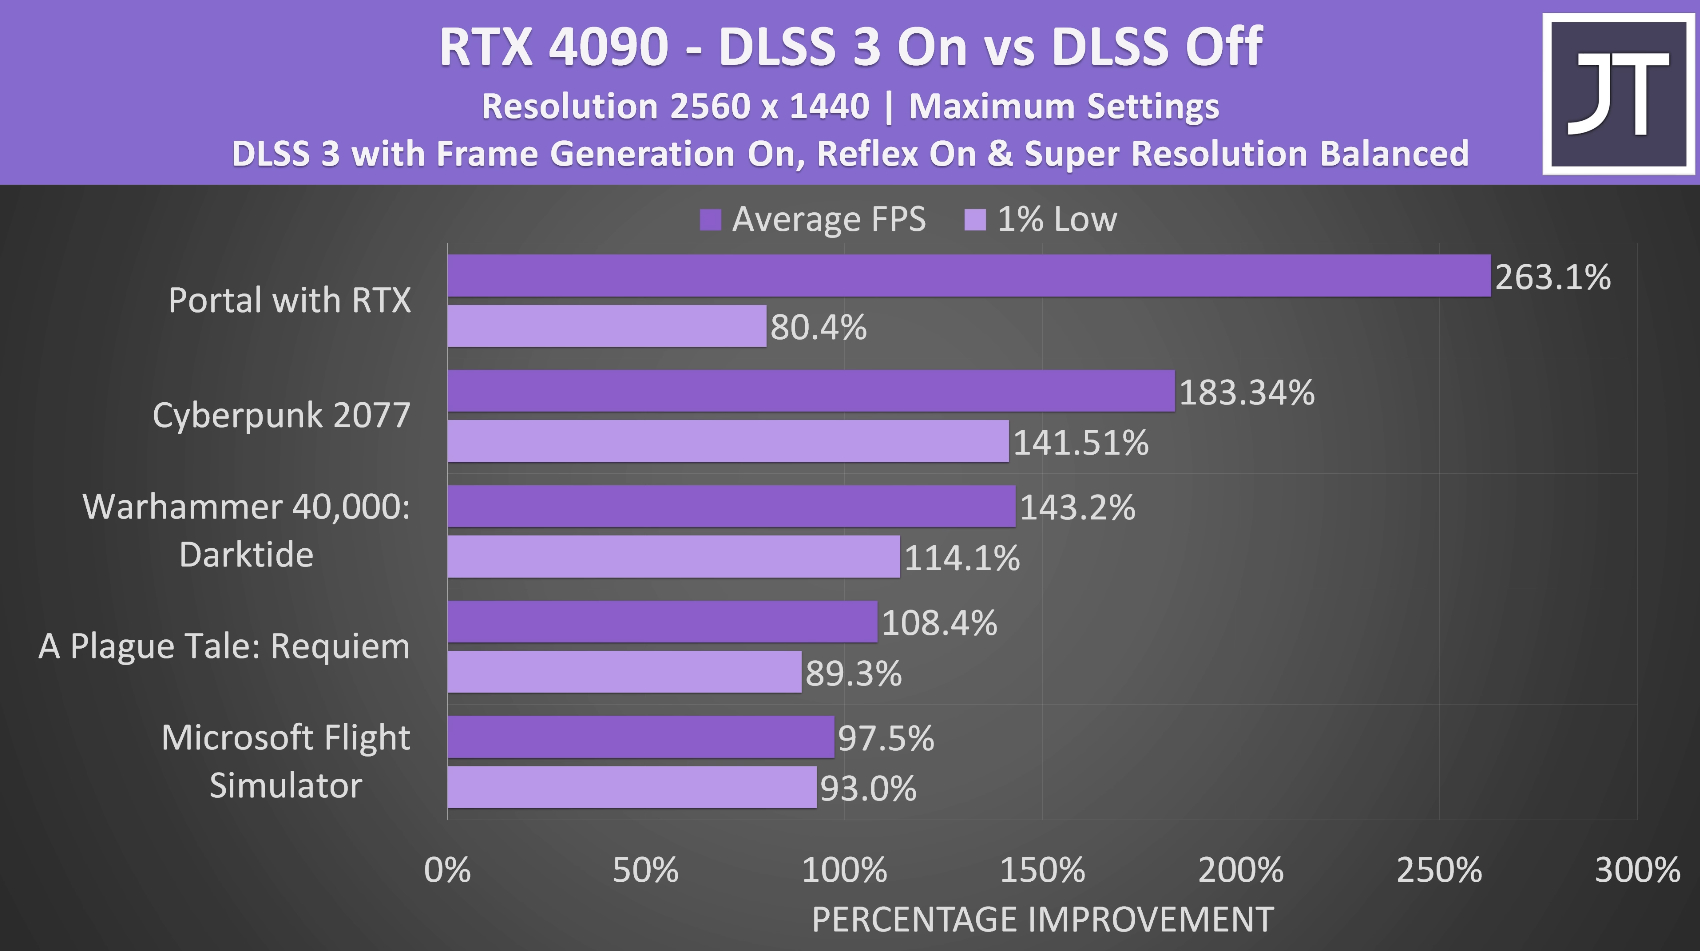 Nvidia GeForce RTX 4090 Desktop vs. Laptop GPU